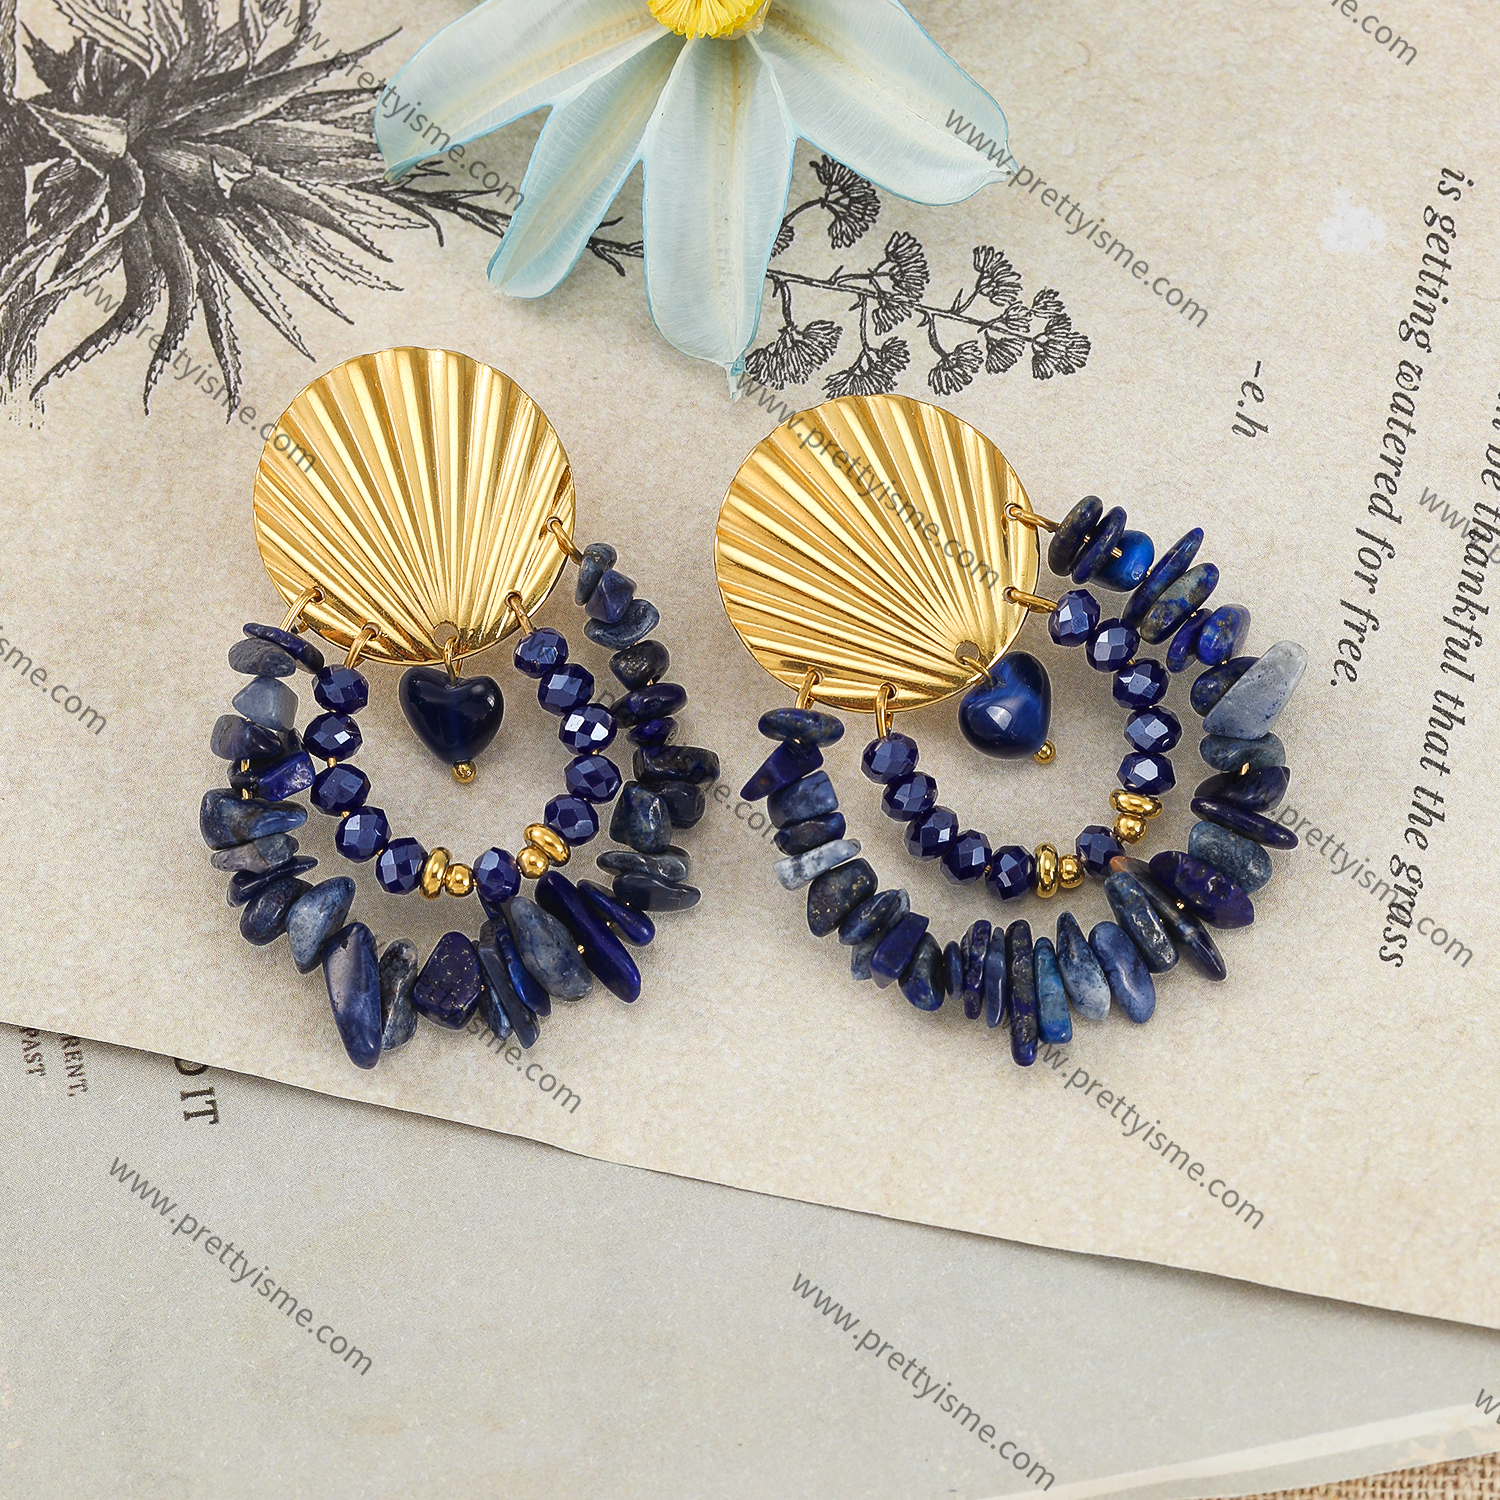 Designer Stainless Steel Earrings Gold Plated 18K with Lapis Lazuli Earrings (3).webp